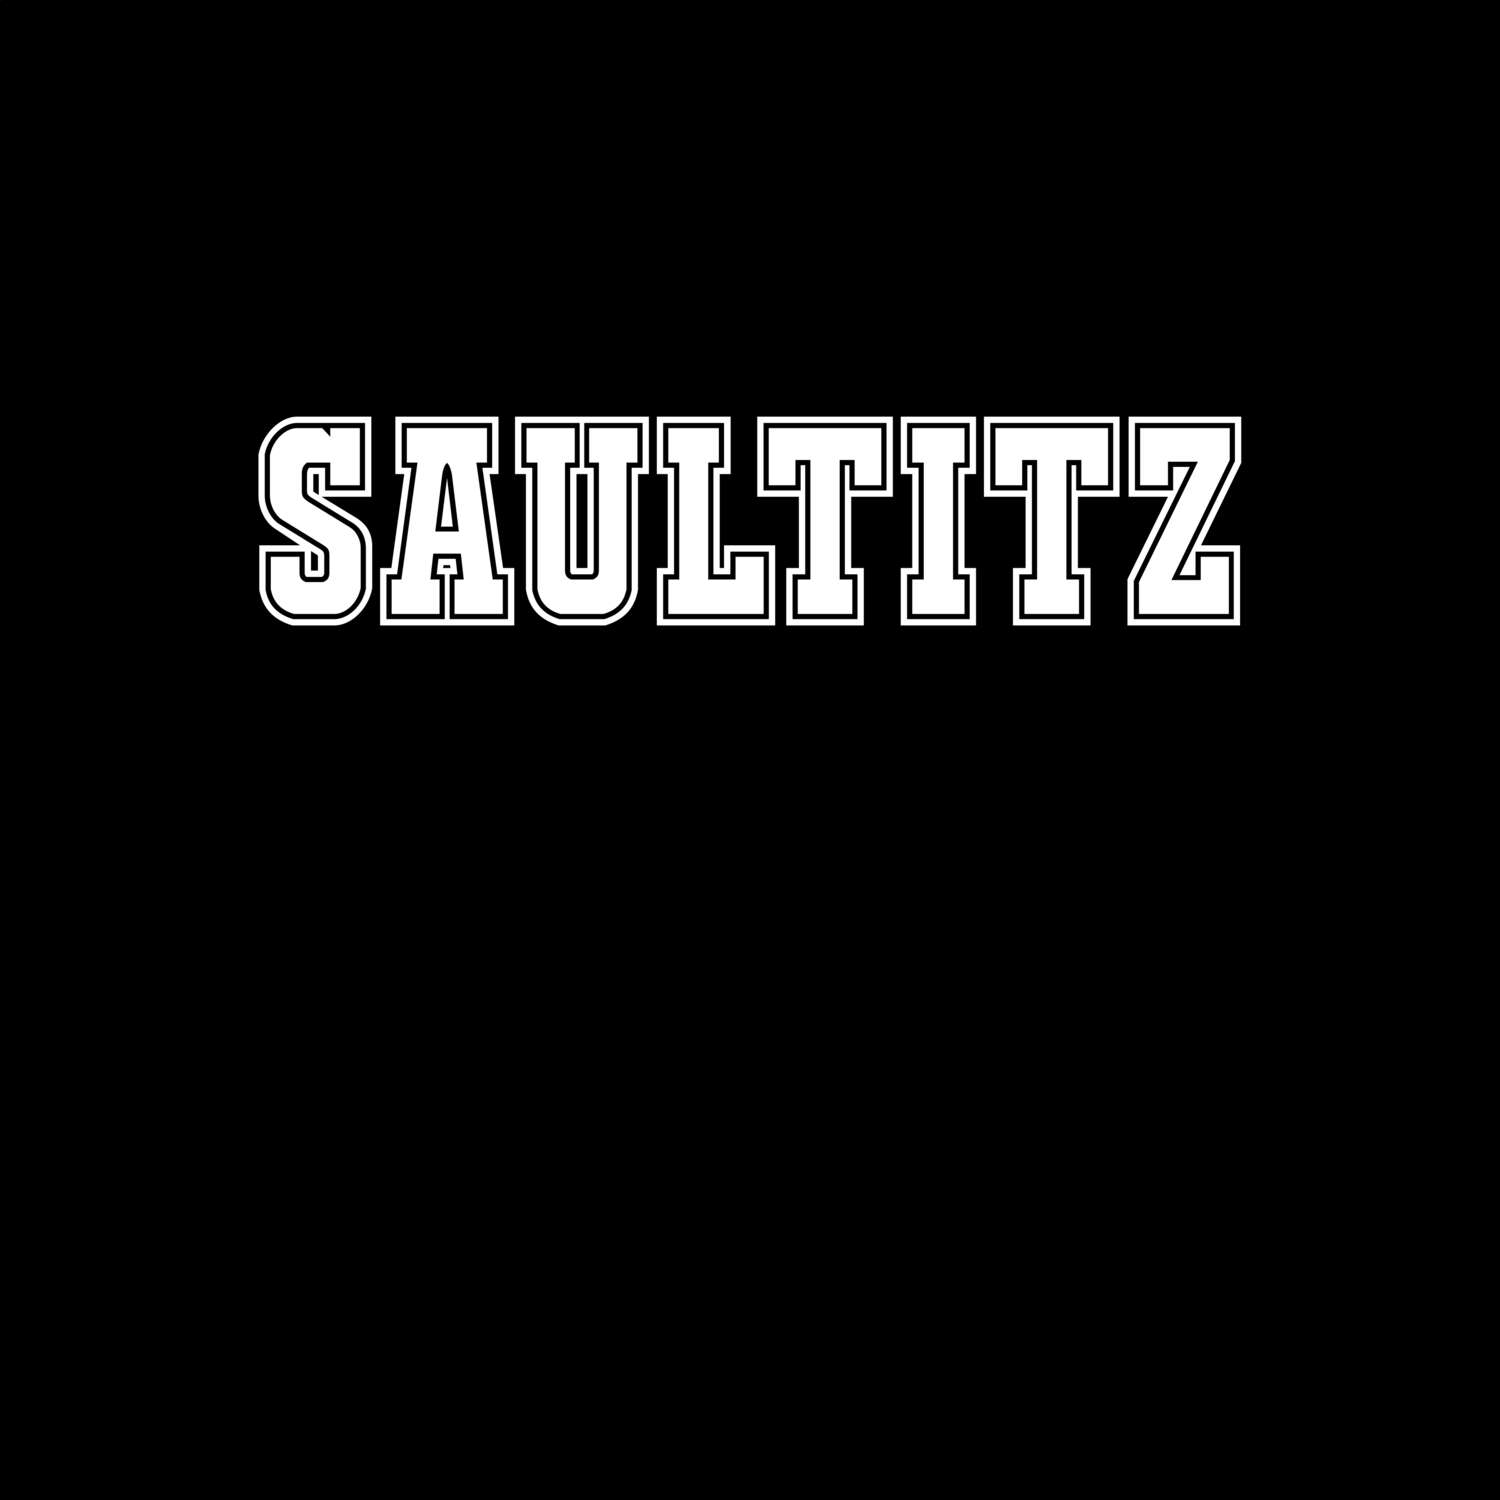 Saultitz T-Shirt »Classic«